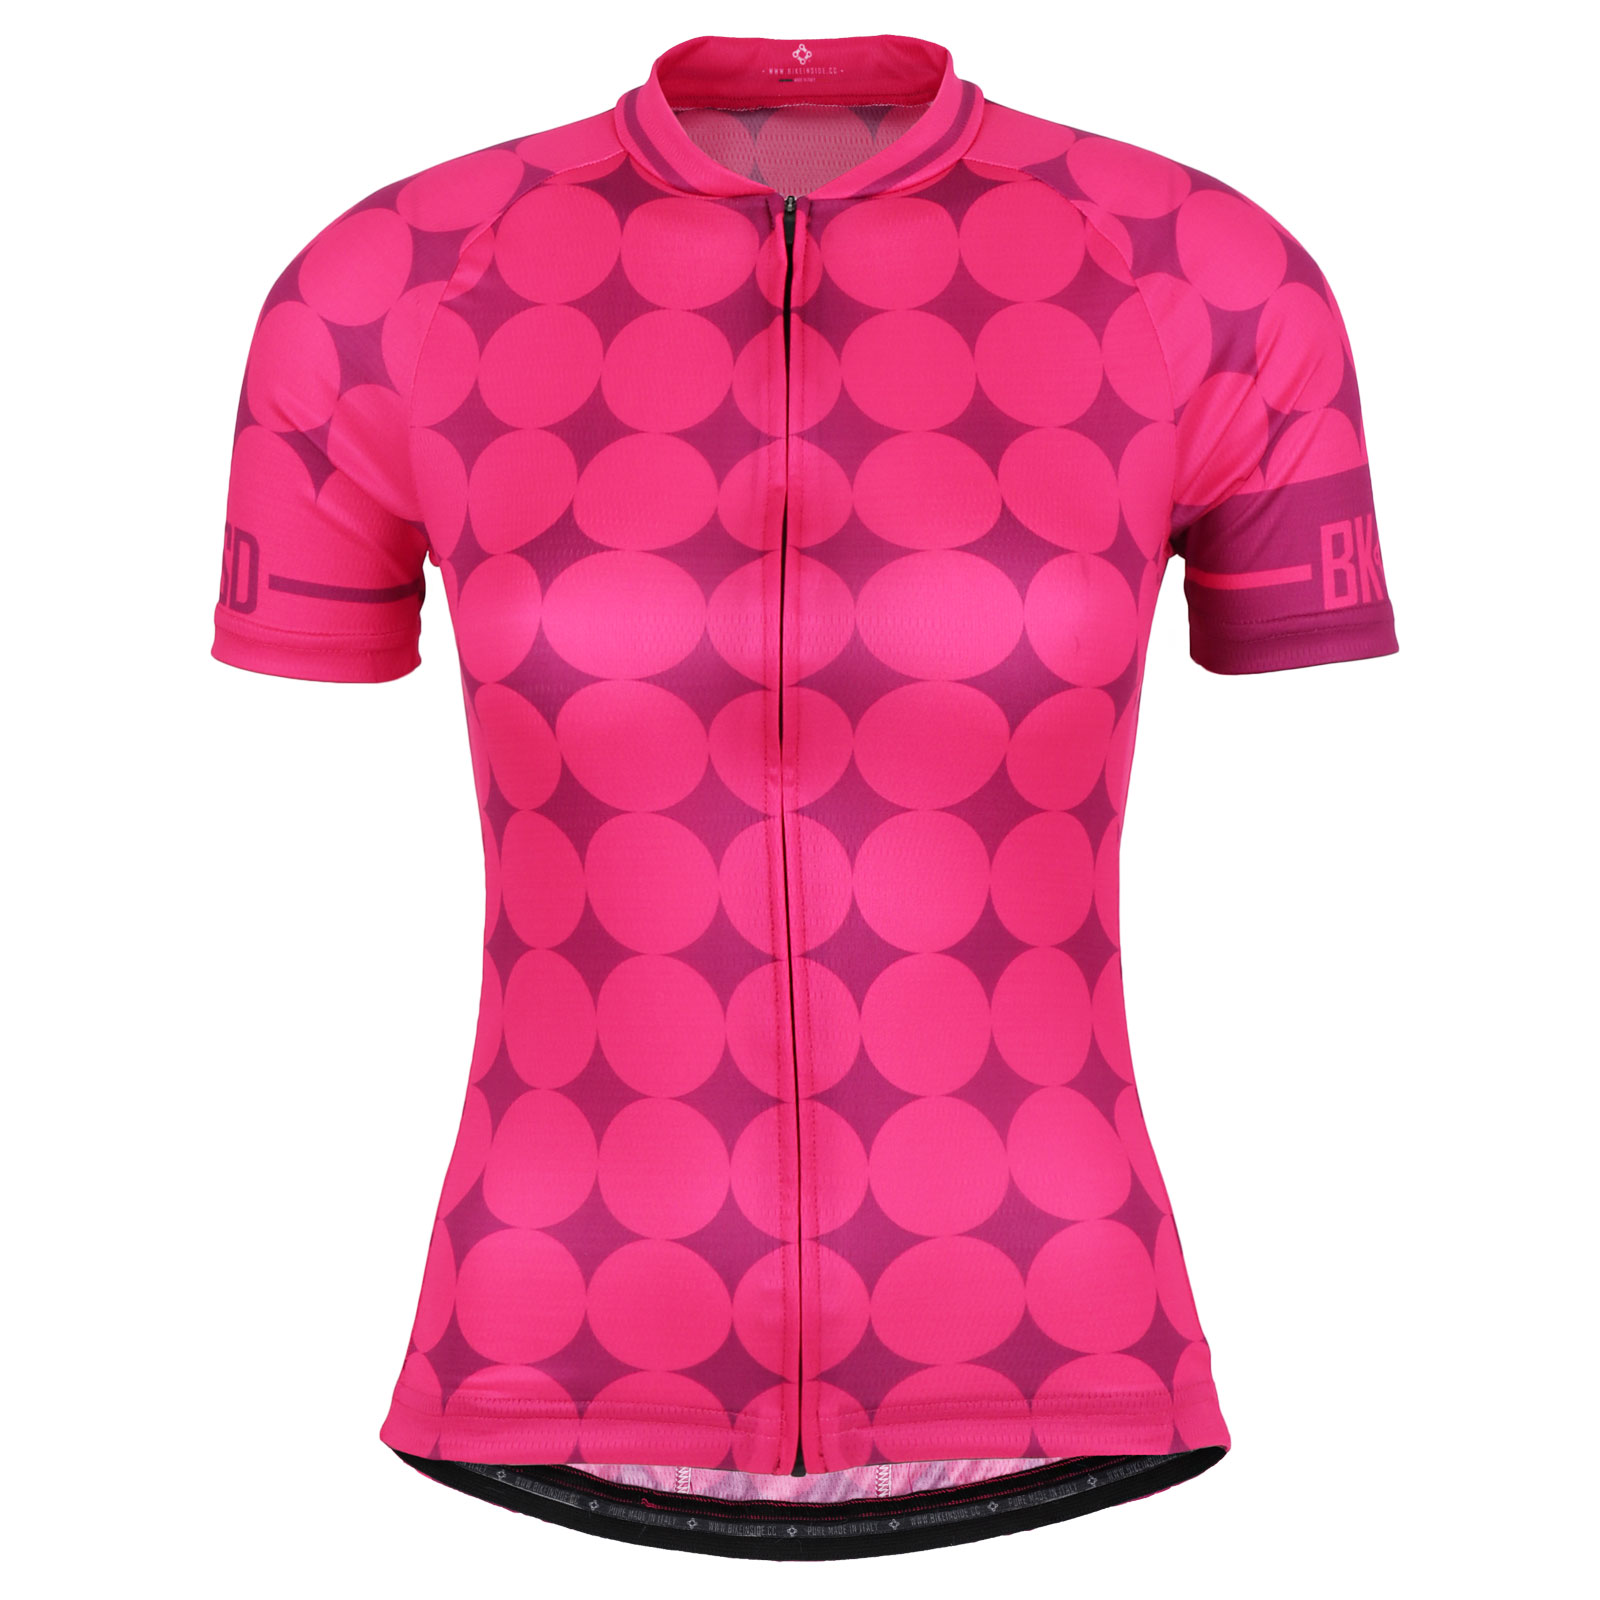 Bild von Bike Inside Cycling Wear Pure Style Damen Trikot - Pink Rounded